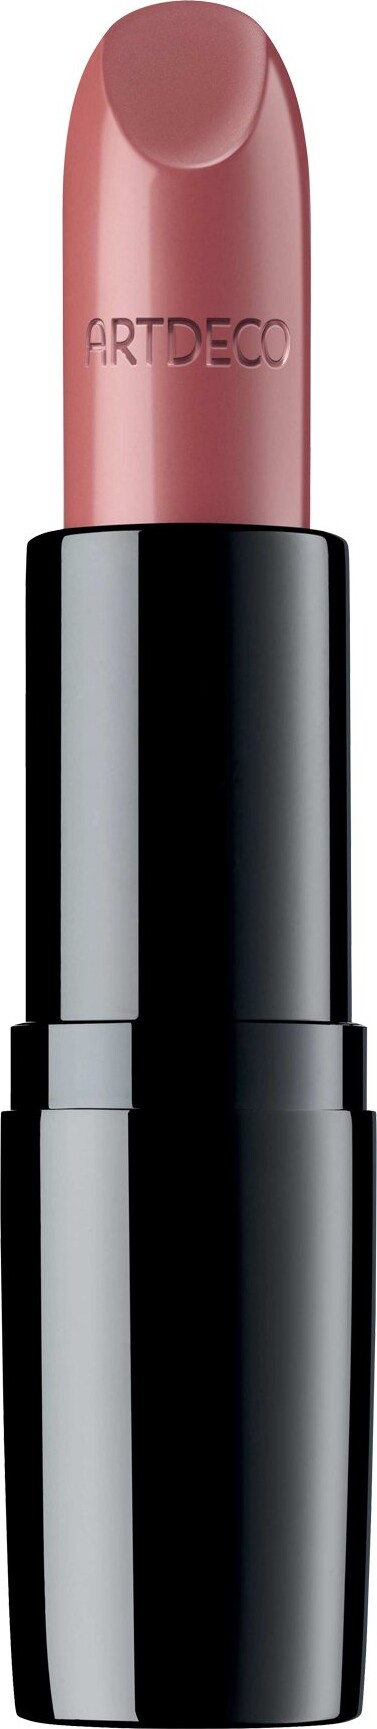 Se Artdeco - Perfect Color Lipstick - 834 Rosewood Rouge hos Gucca.dk